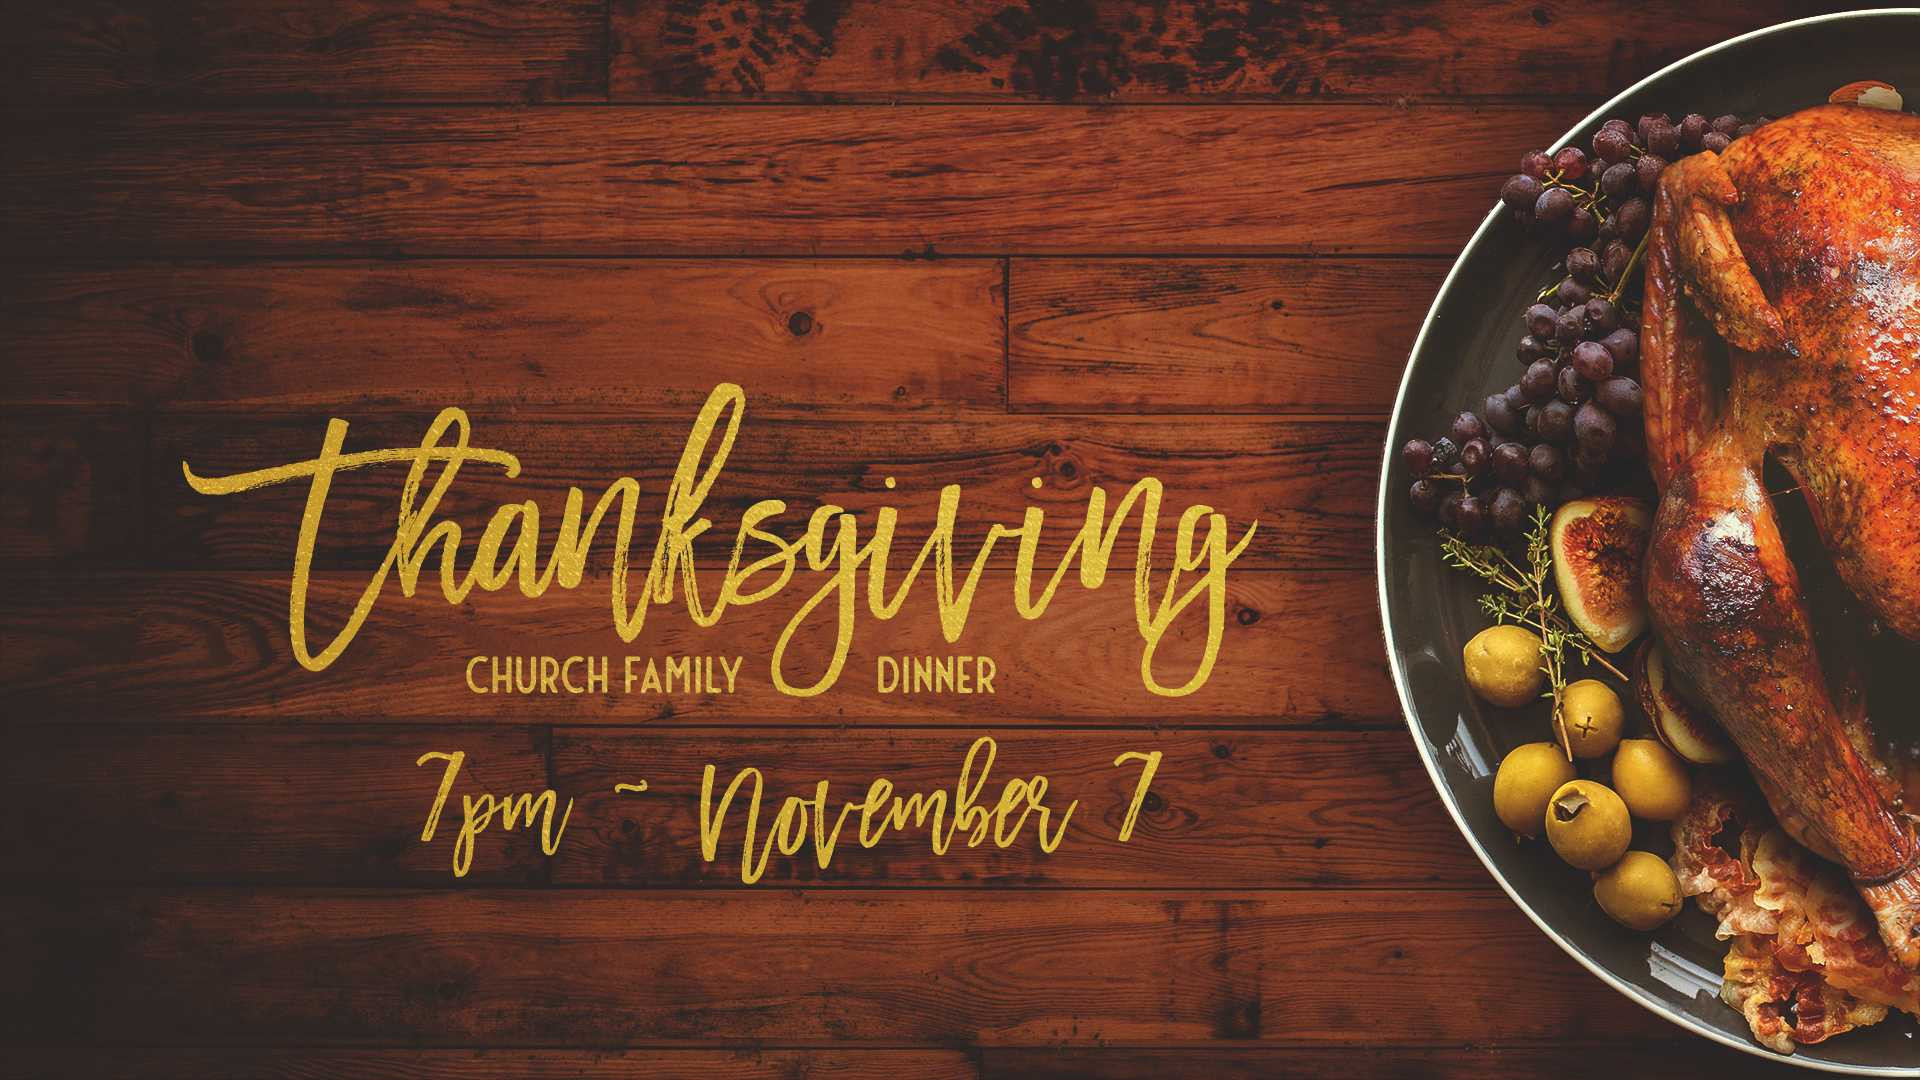 Church Thanksgiving Dinner
 Church Family Thanksgiving Dinner – Brookstone munity